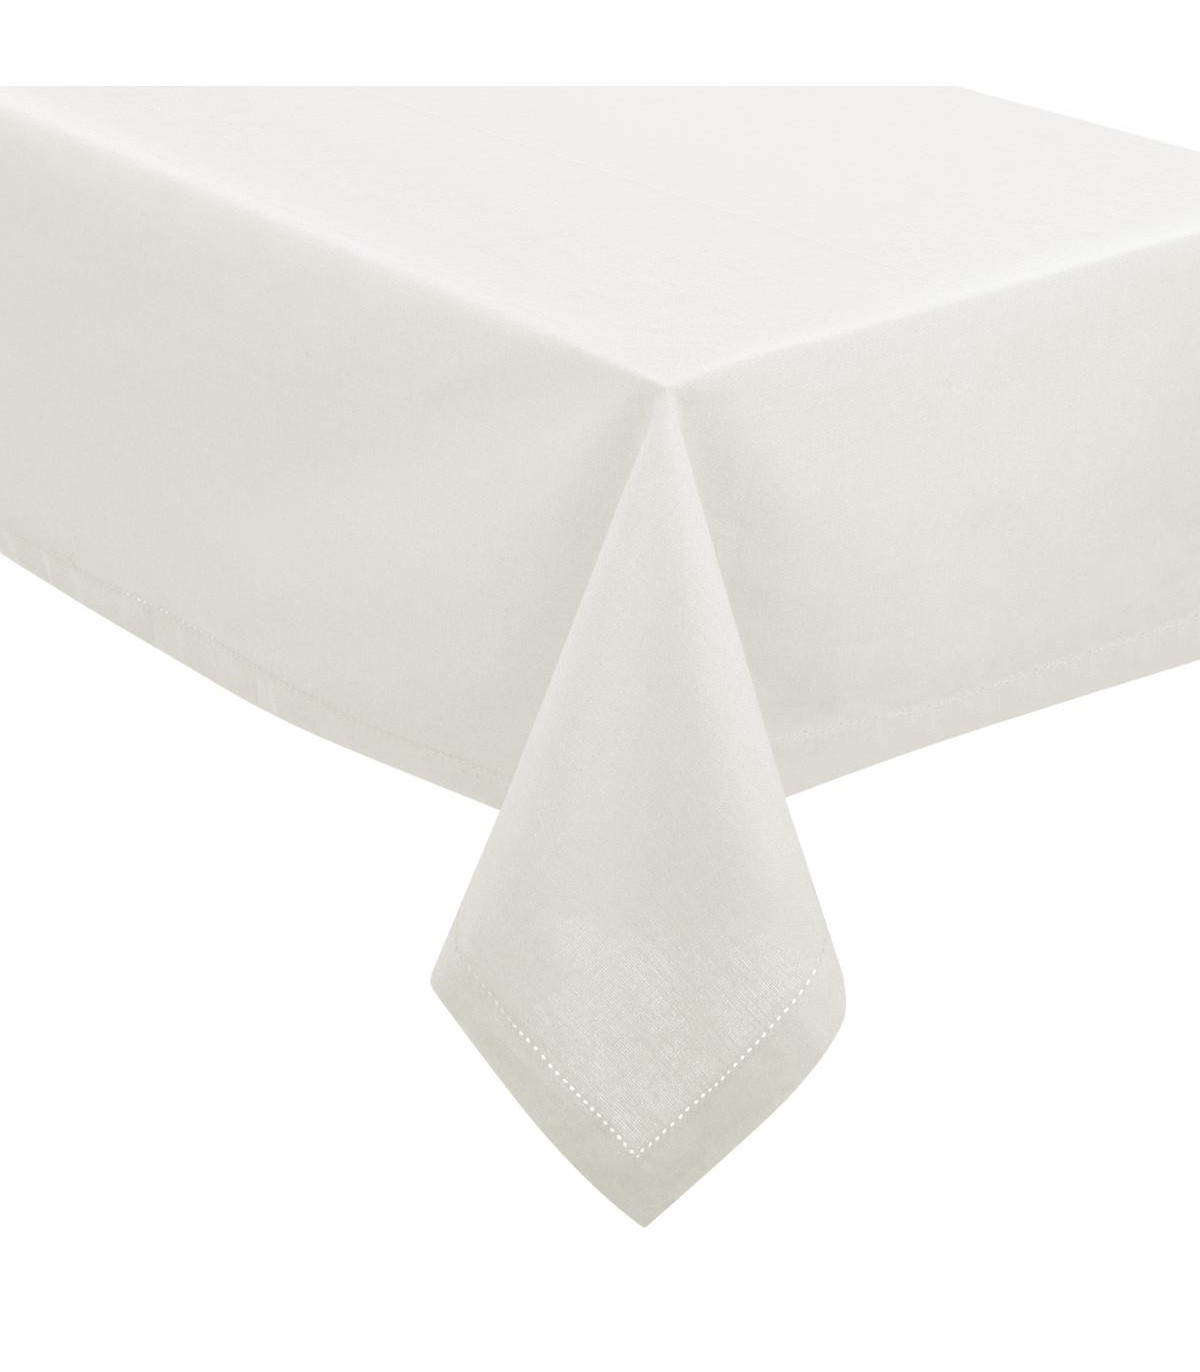 nappe-chambray-blanc-coton-dimensions-140x240-cm